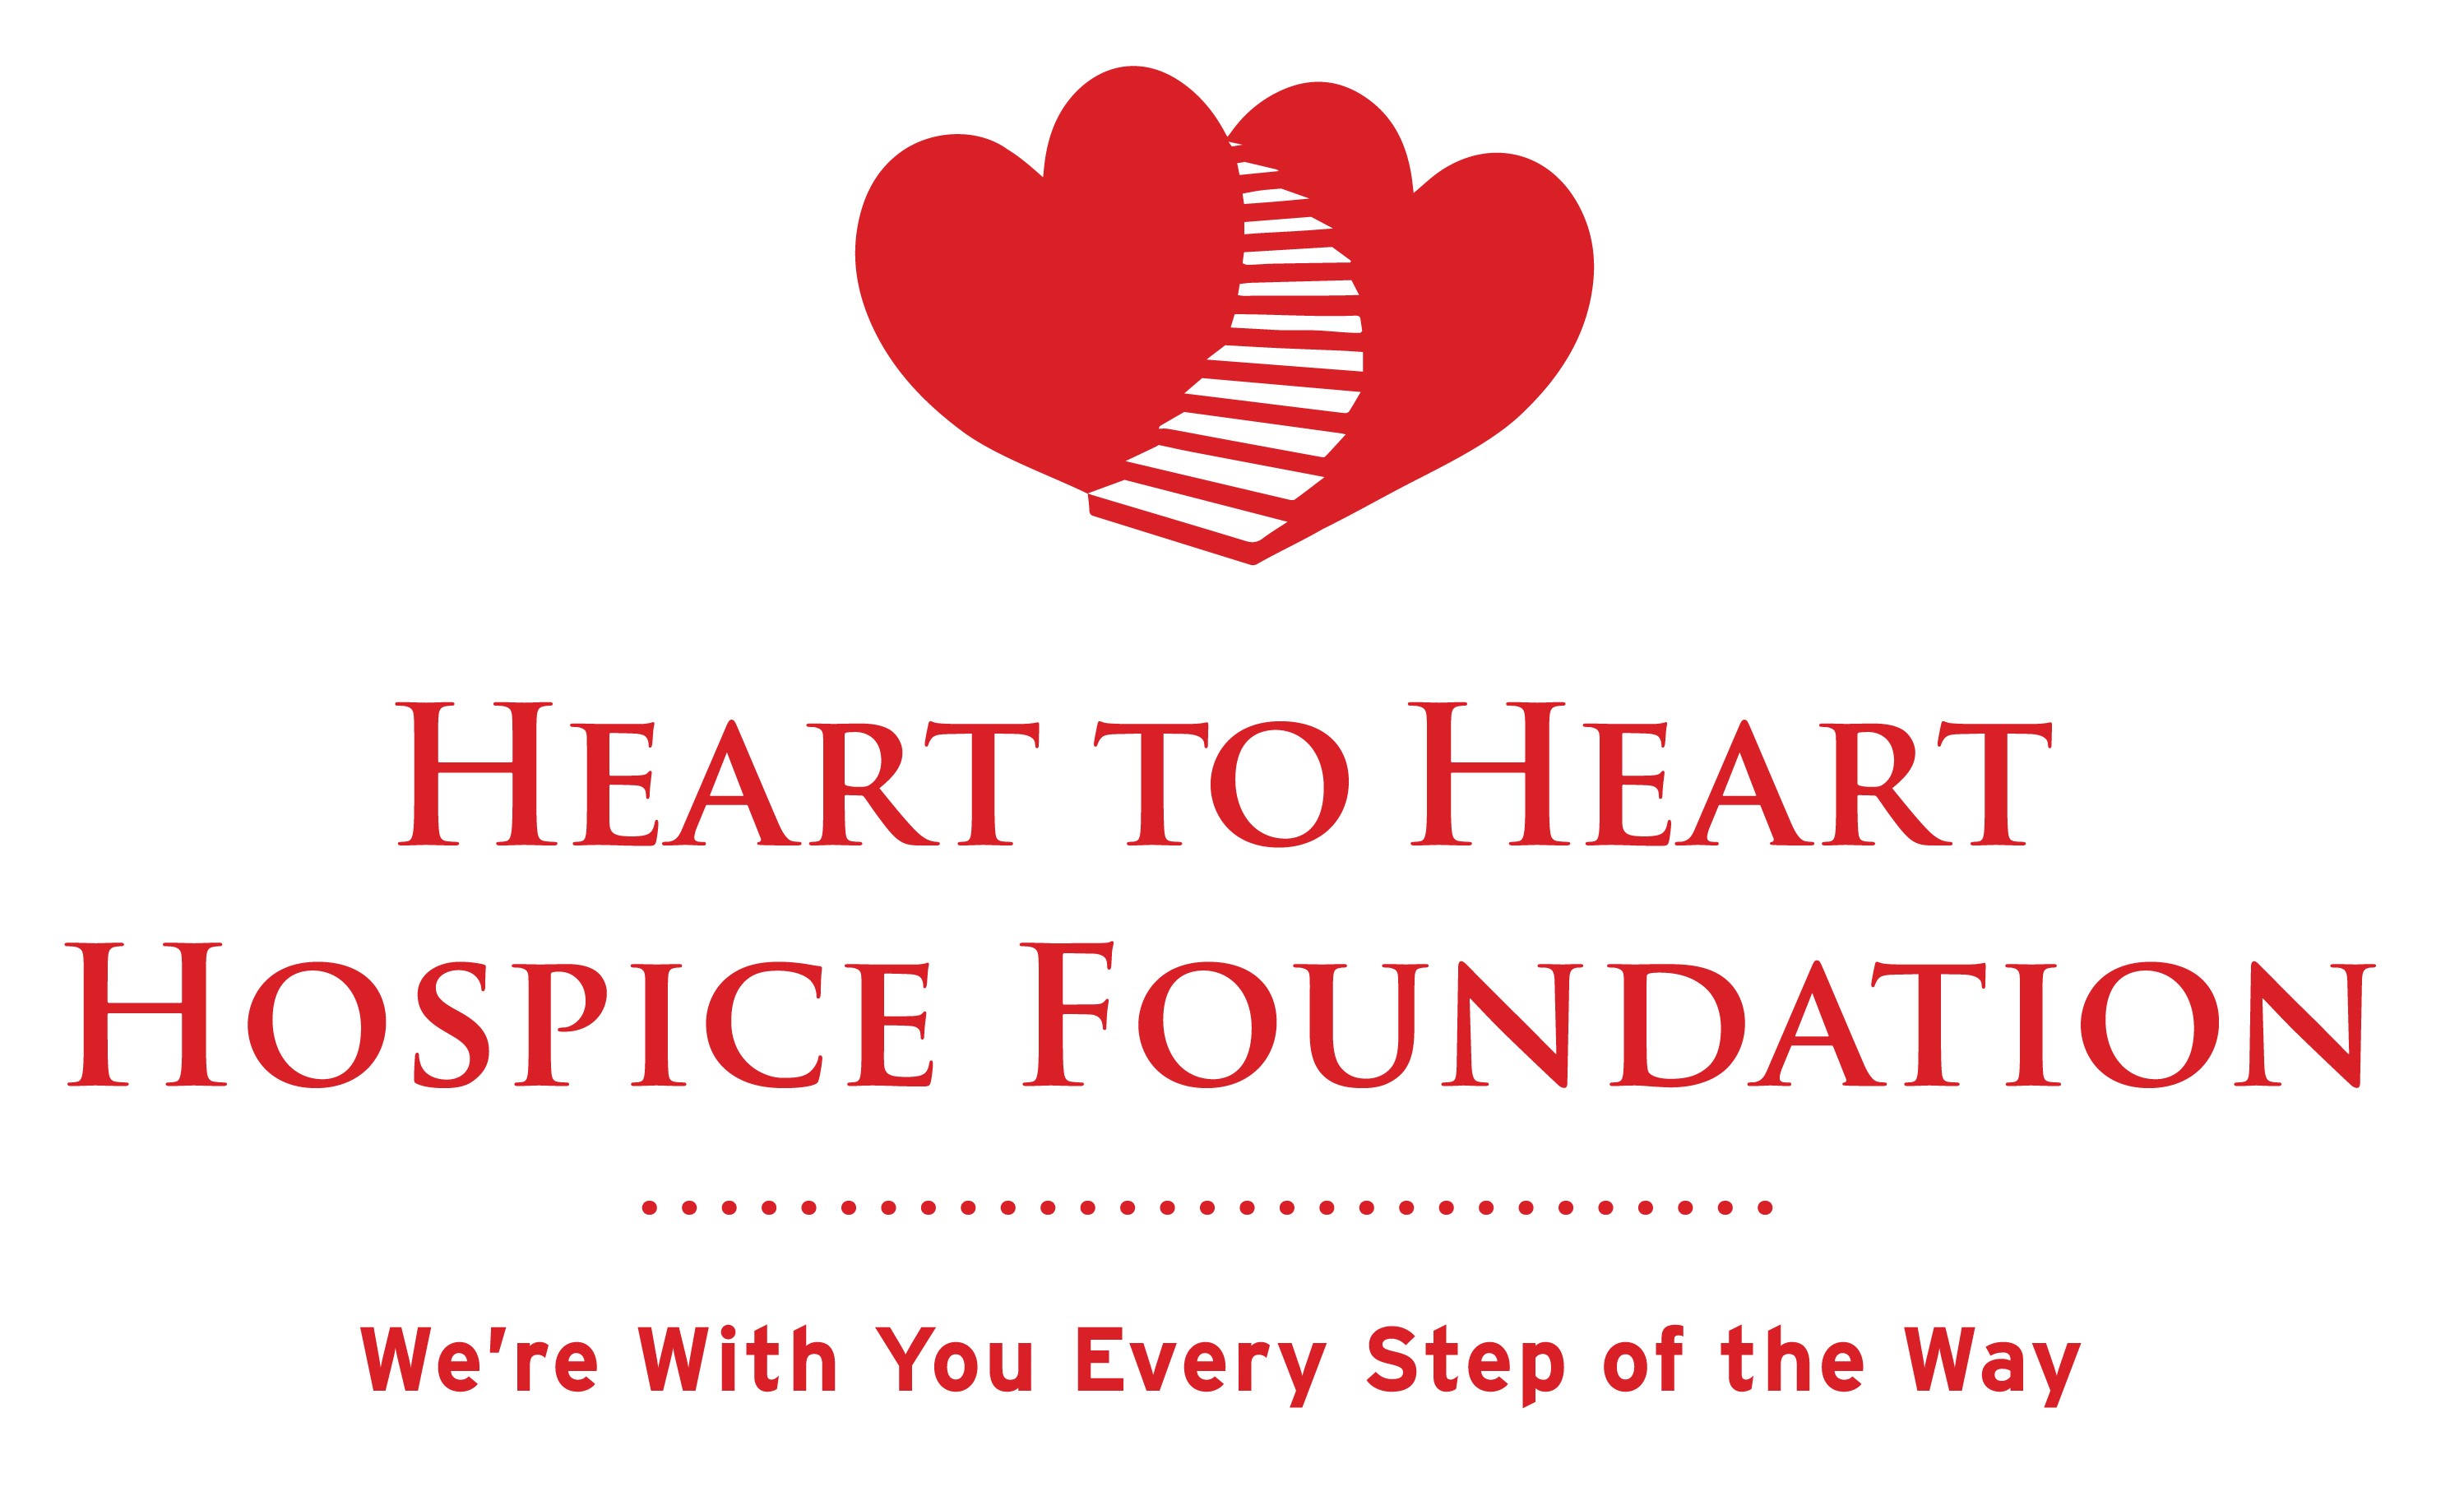 C. Heart to Heart Hospice Foundation (Photobooth)